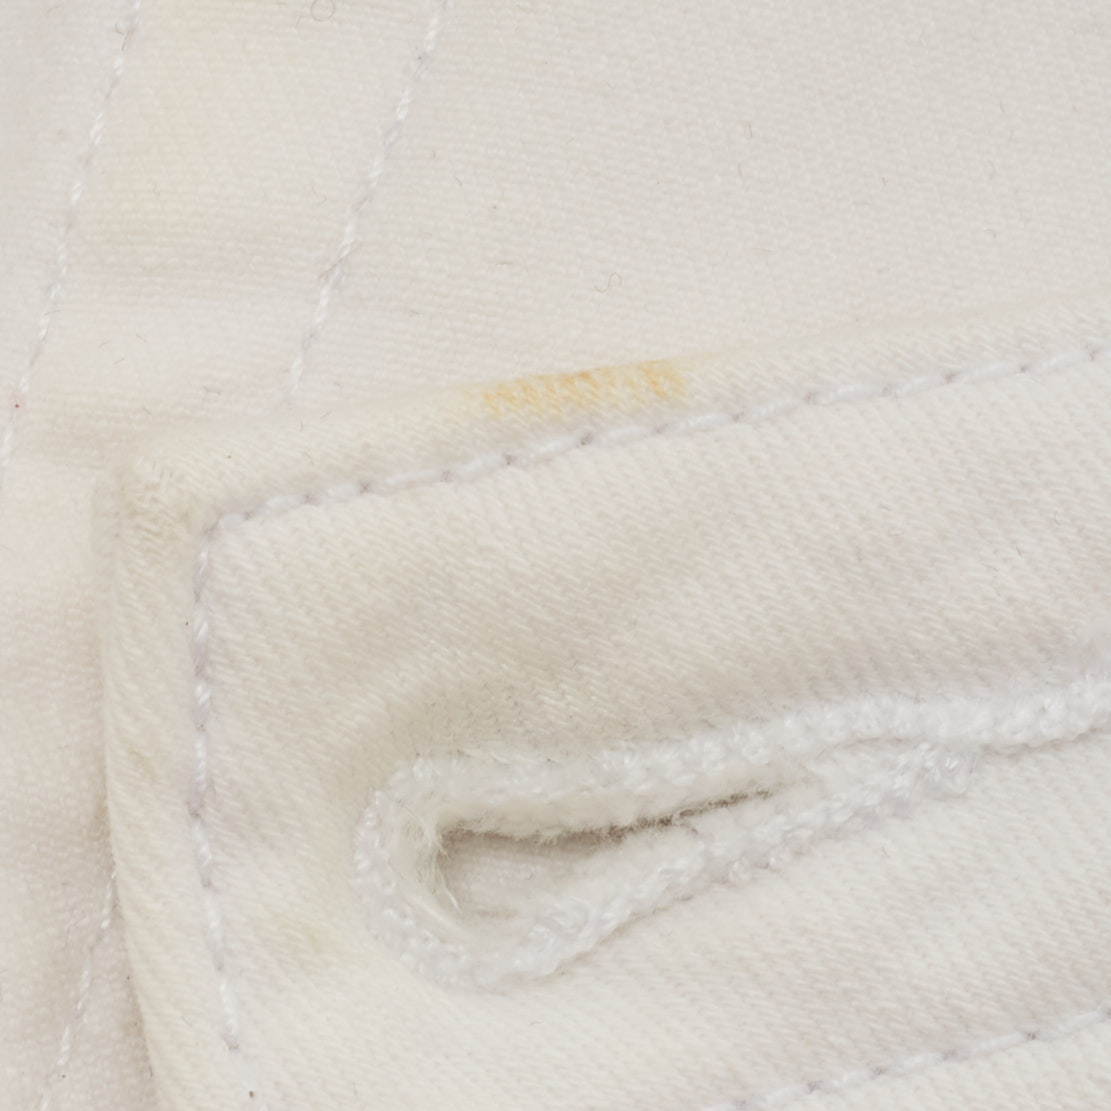 Burberry Brit White Denim Alperton Cropped Jeans S Waist 27